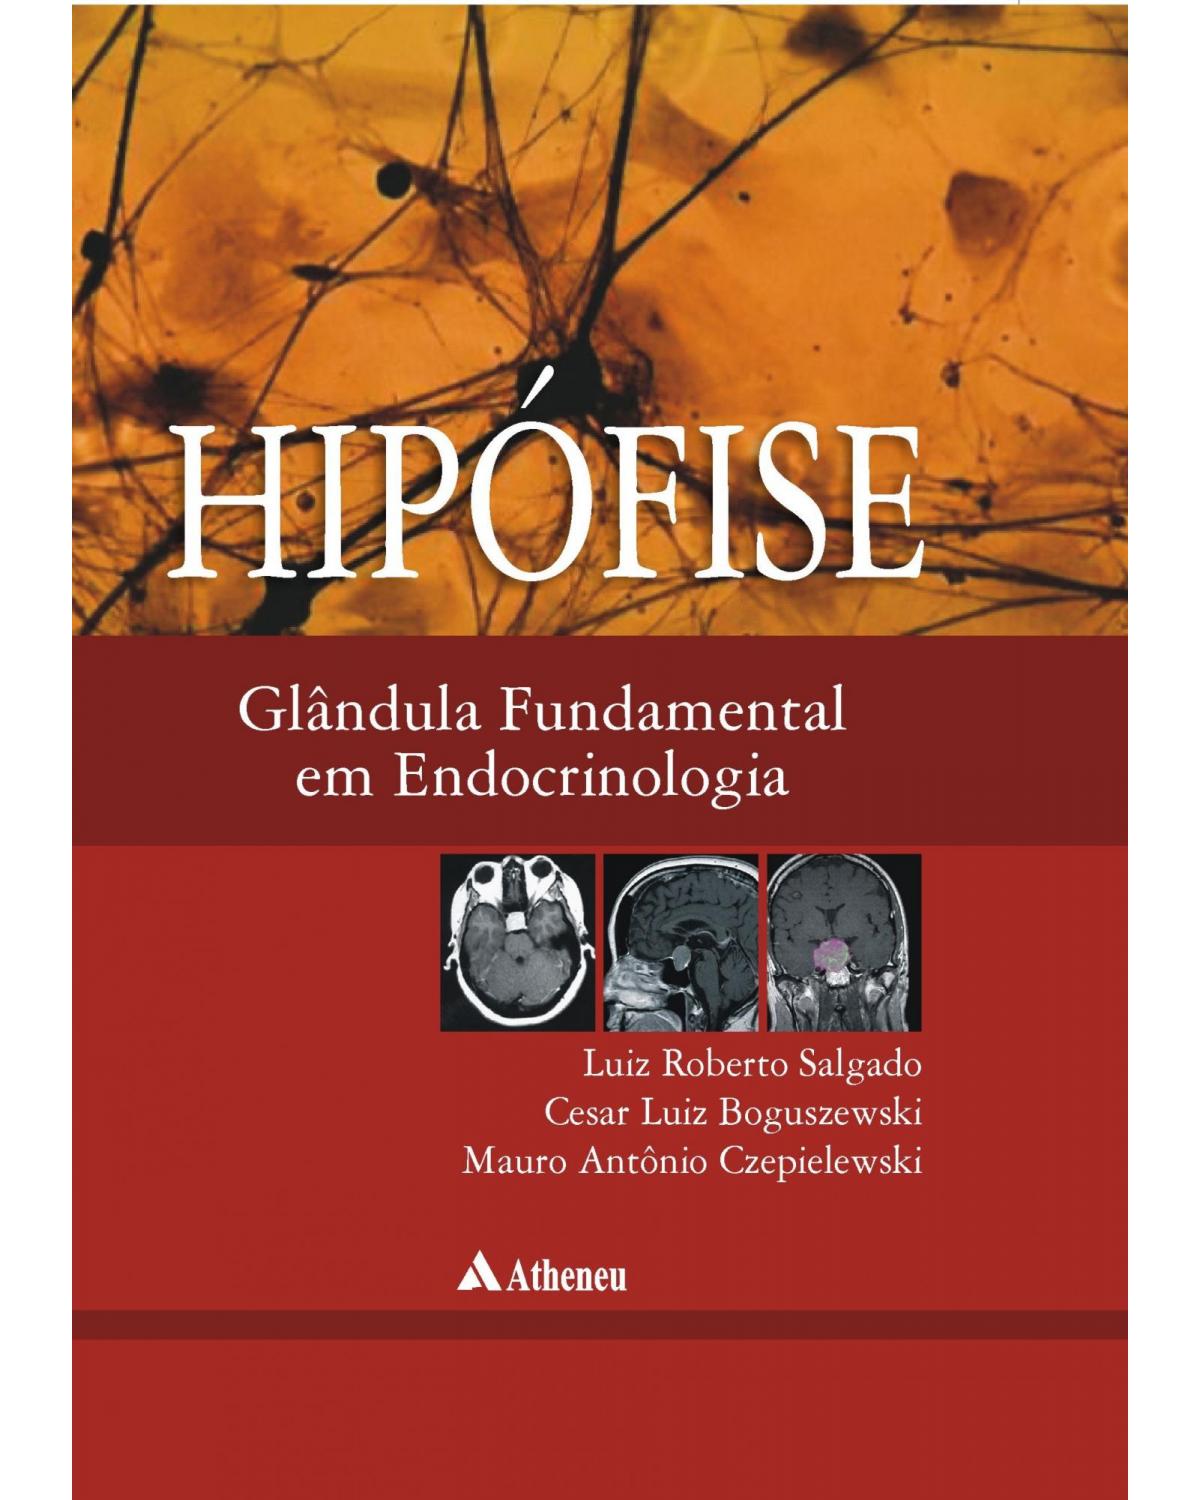 Hipófise glândula fundamental em endocrinologia - 1ª Edição | 2013